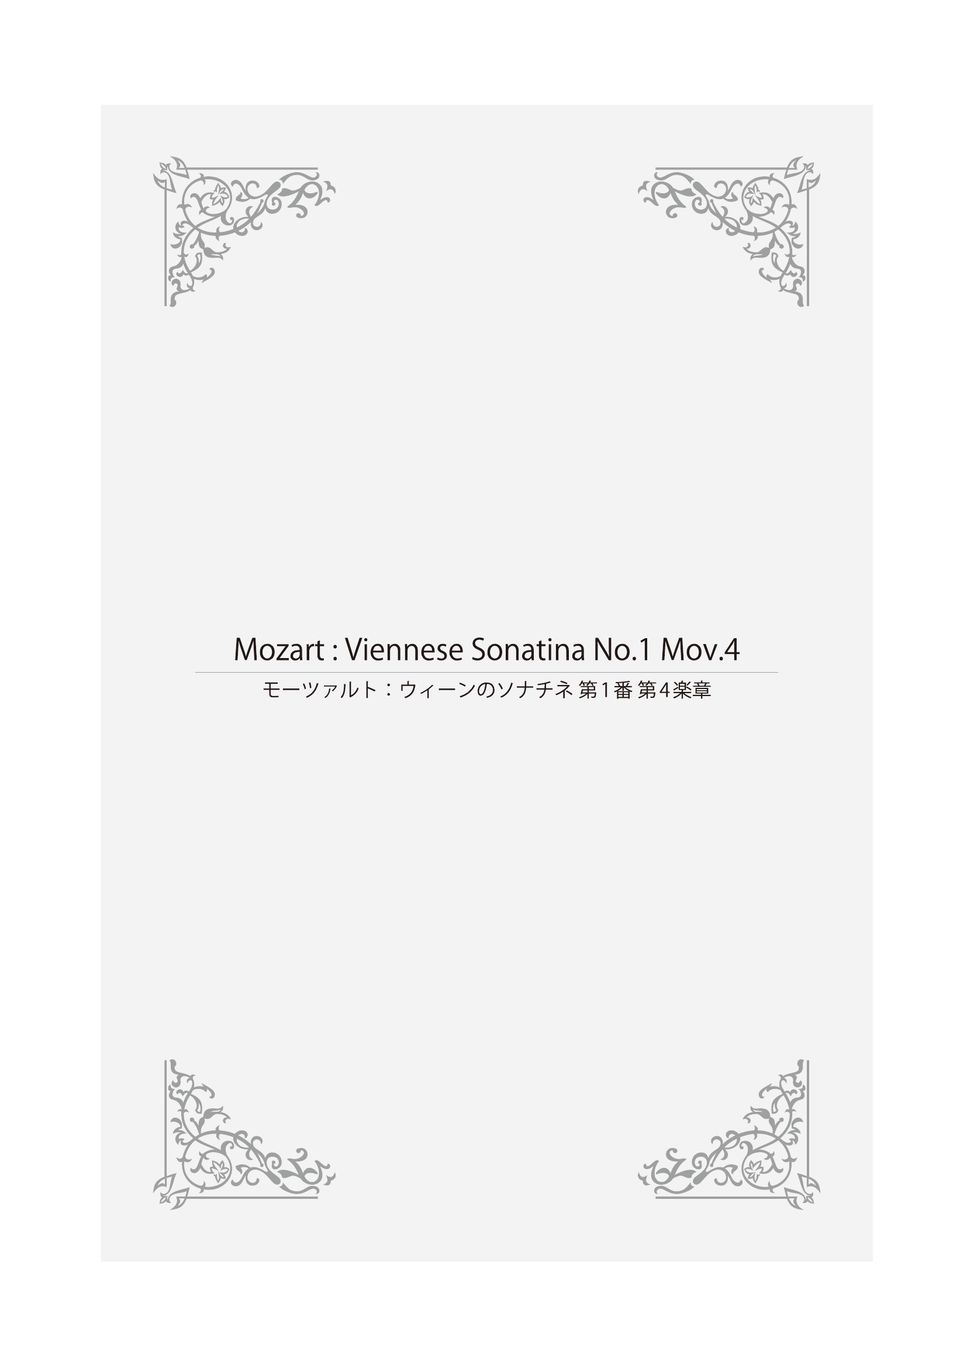 Mozart - Viennese Sonatina No.1 Mov.4 (Solo Guitar) by Daisuke Minamizawa